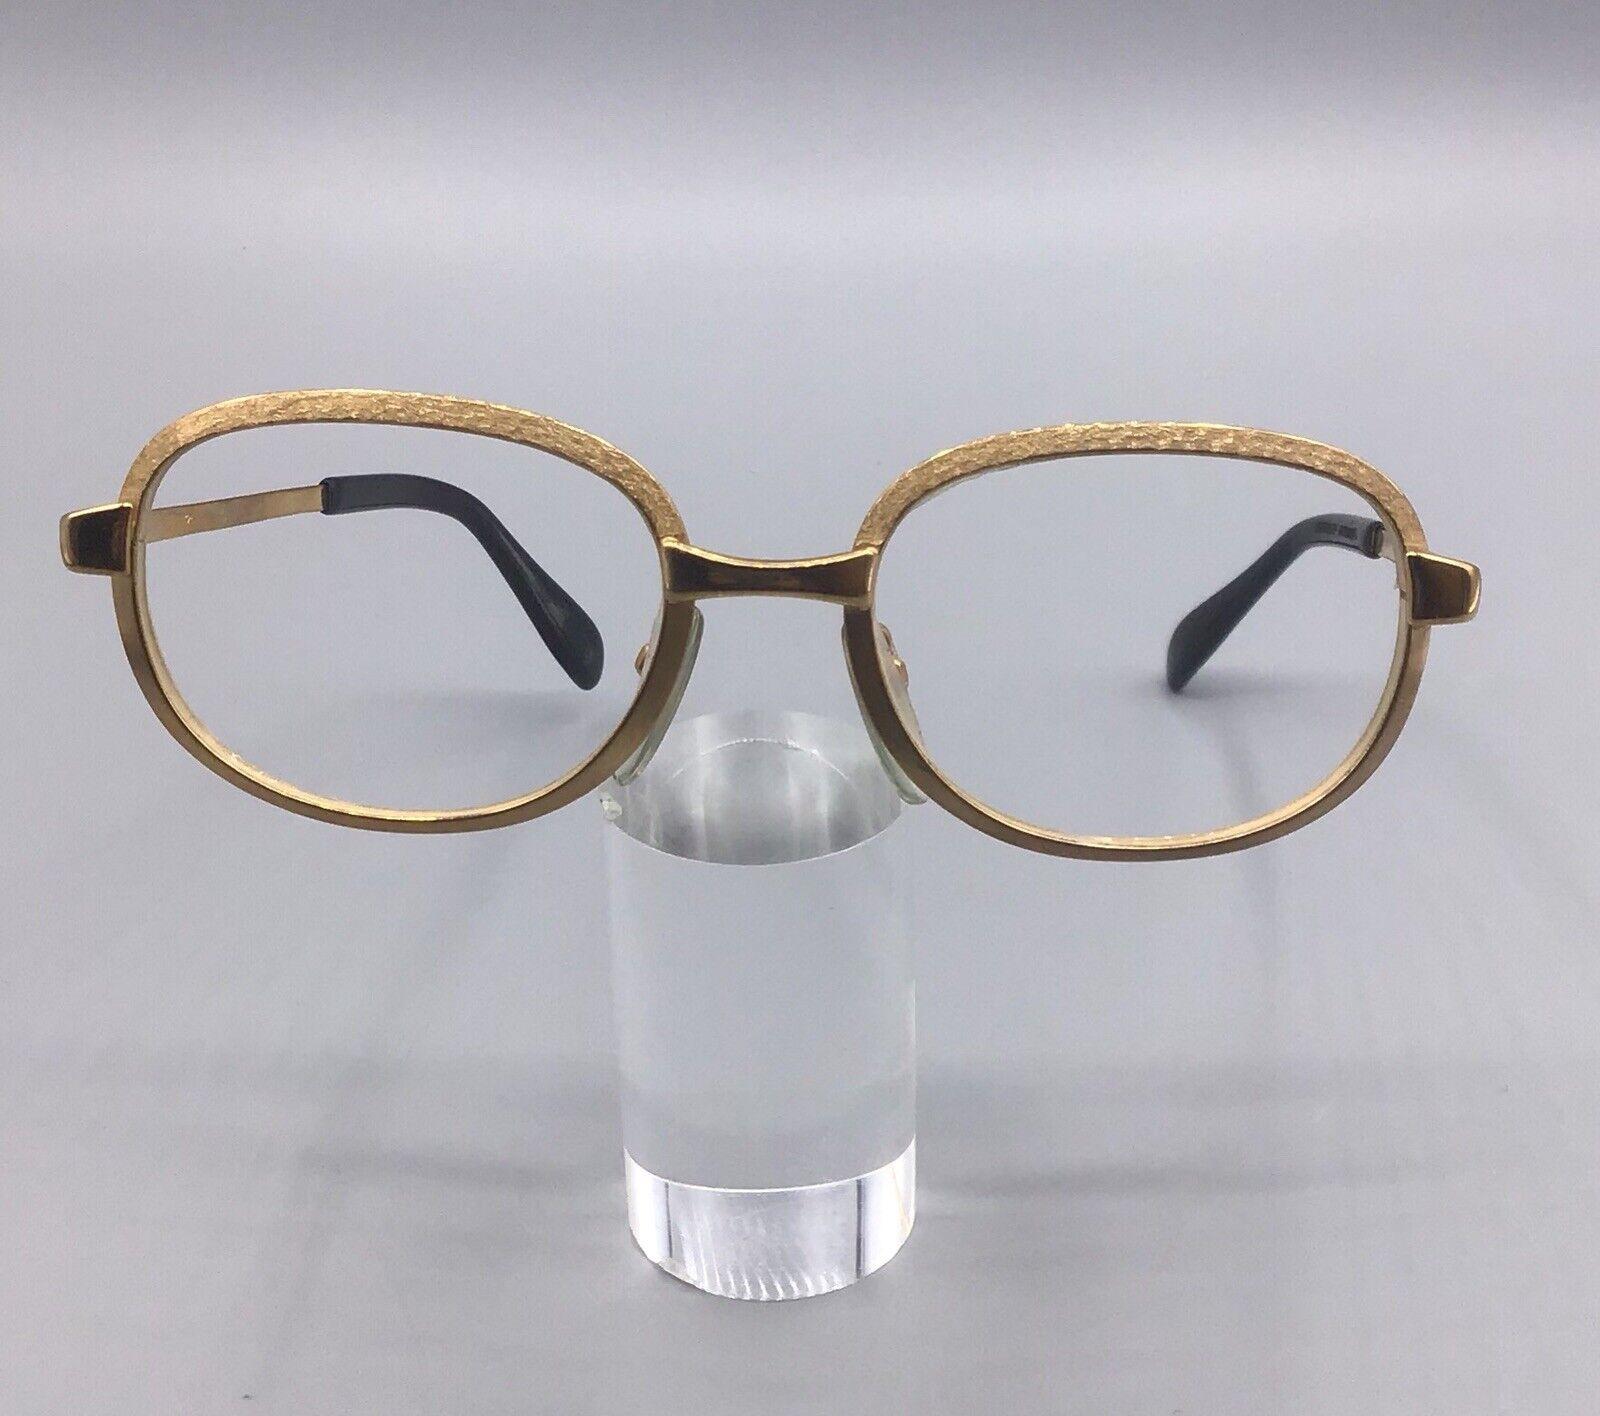 Metzler eyeglasses frame gold laminated vintage occhiale brillen